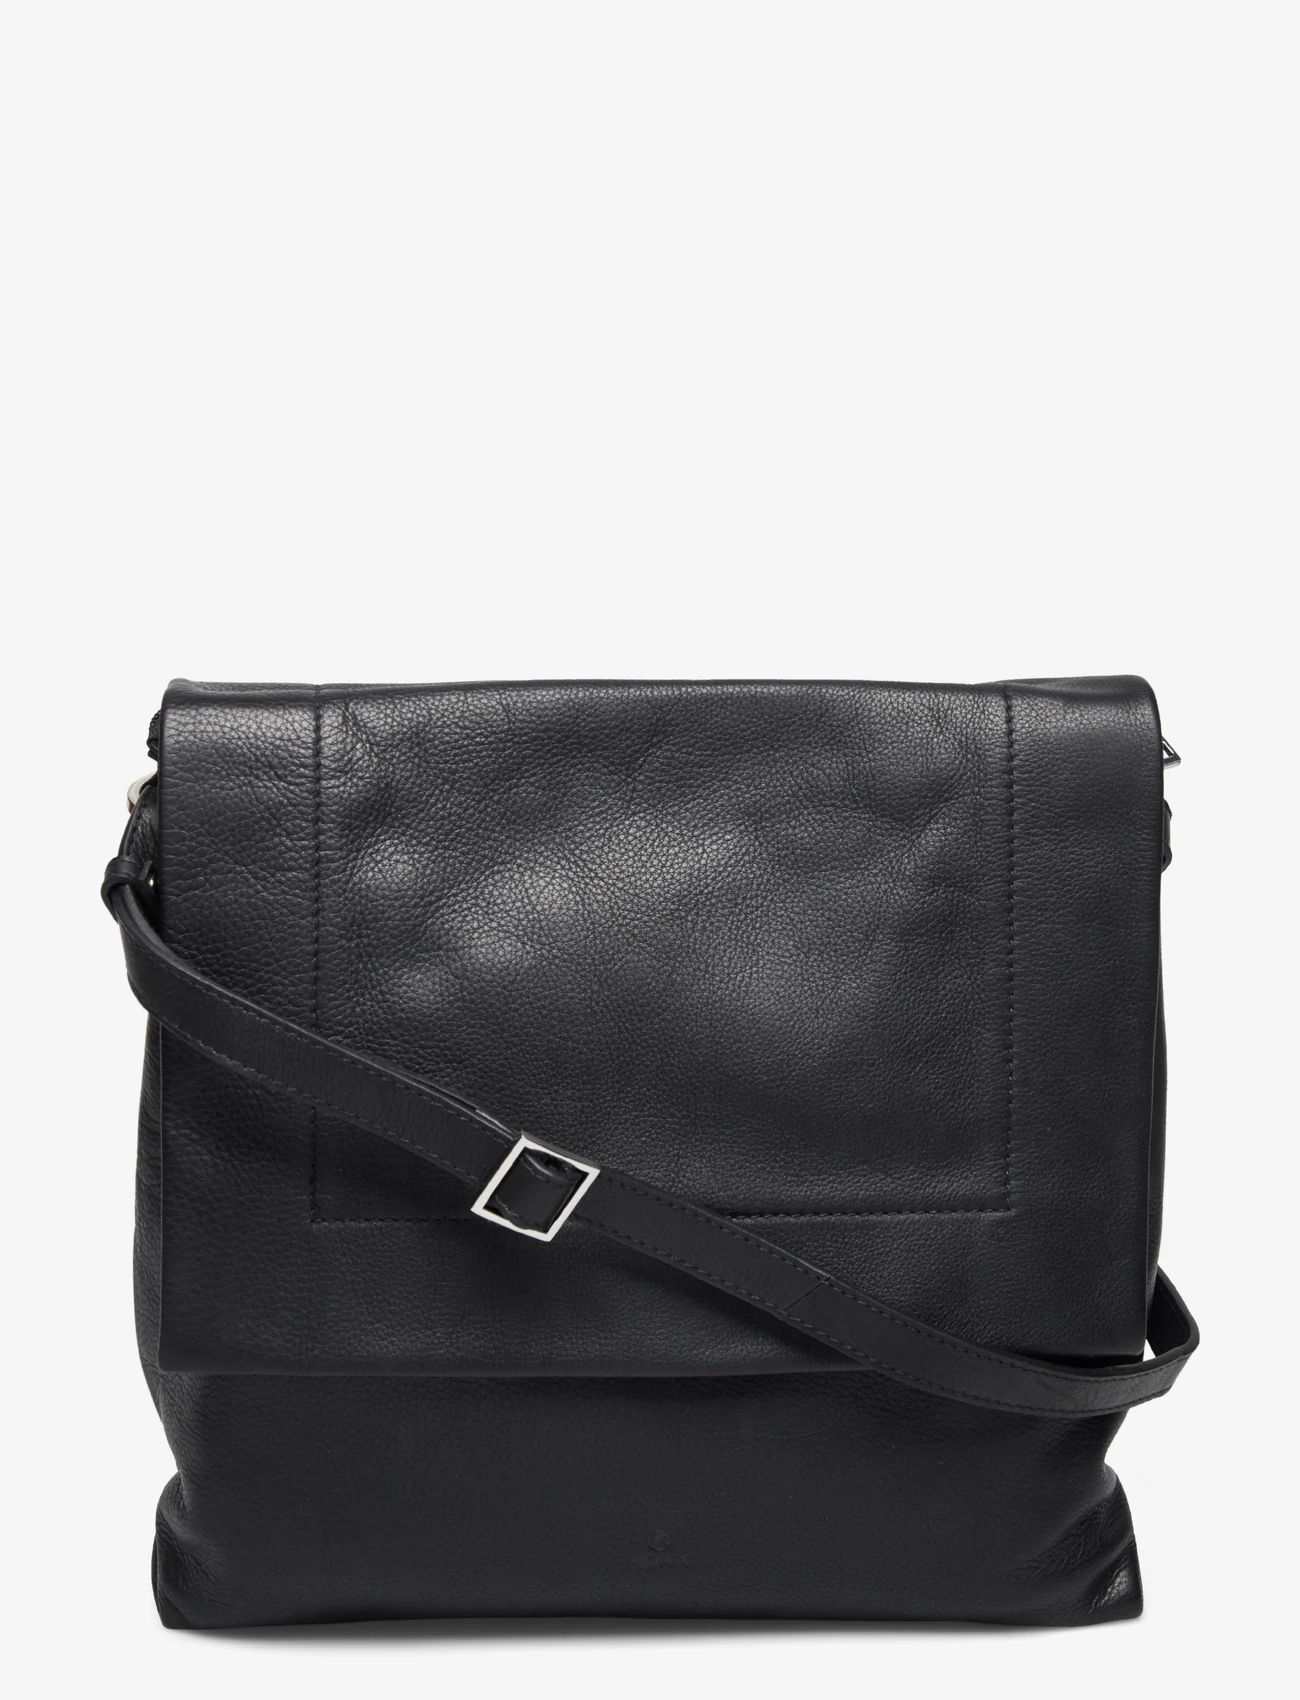 Adax - Venezia shoulder bag Ninna - party wear at outlet prices - black - 0